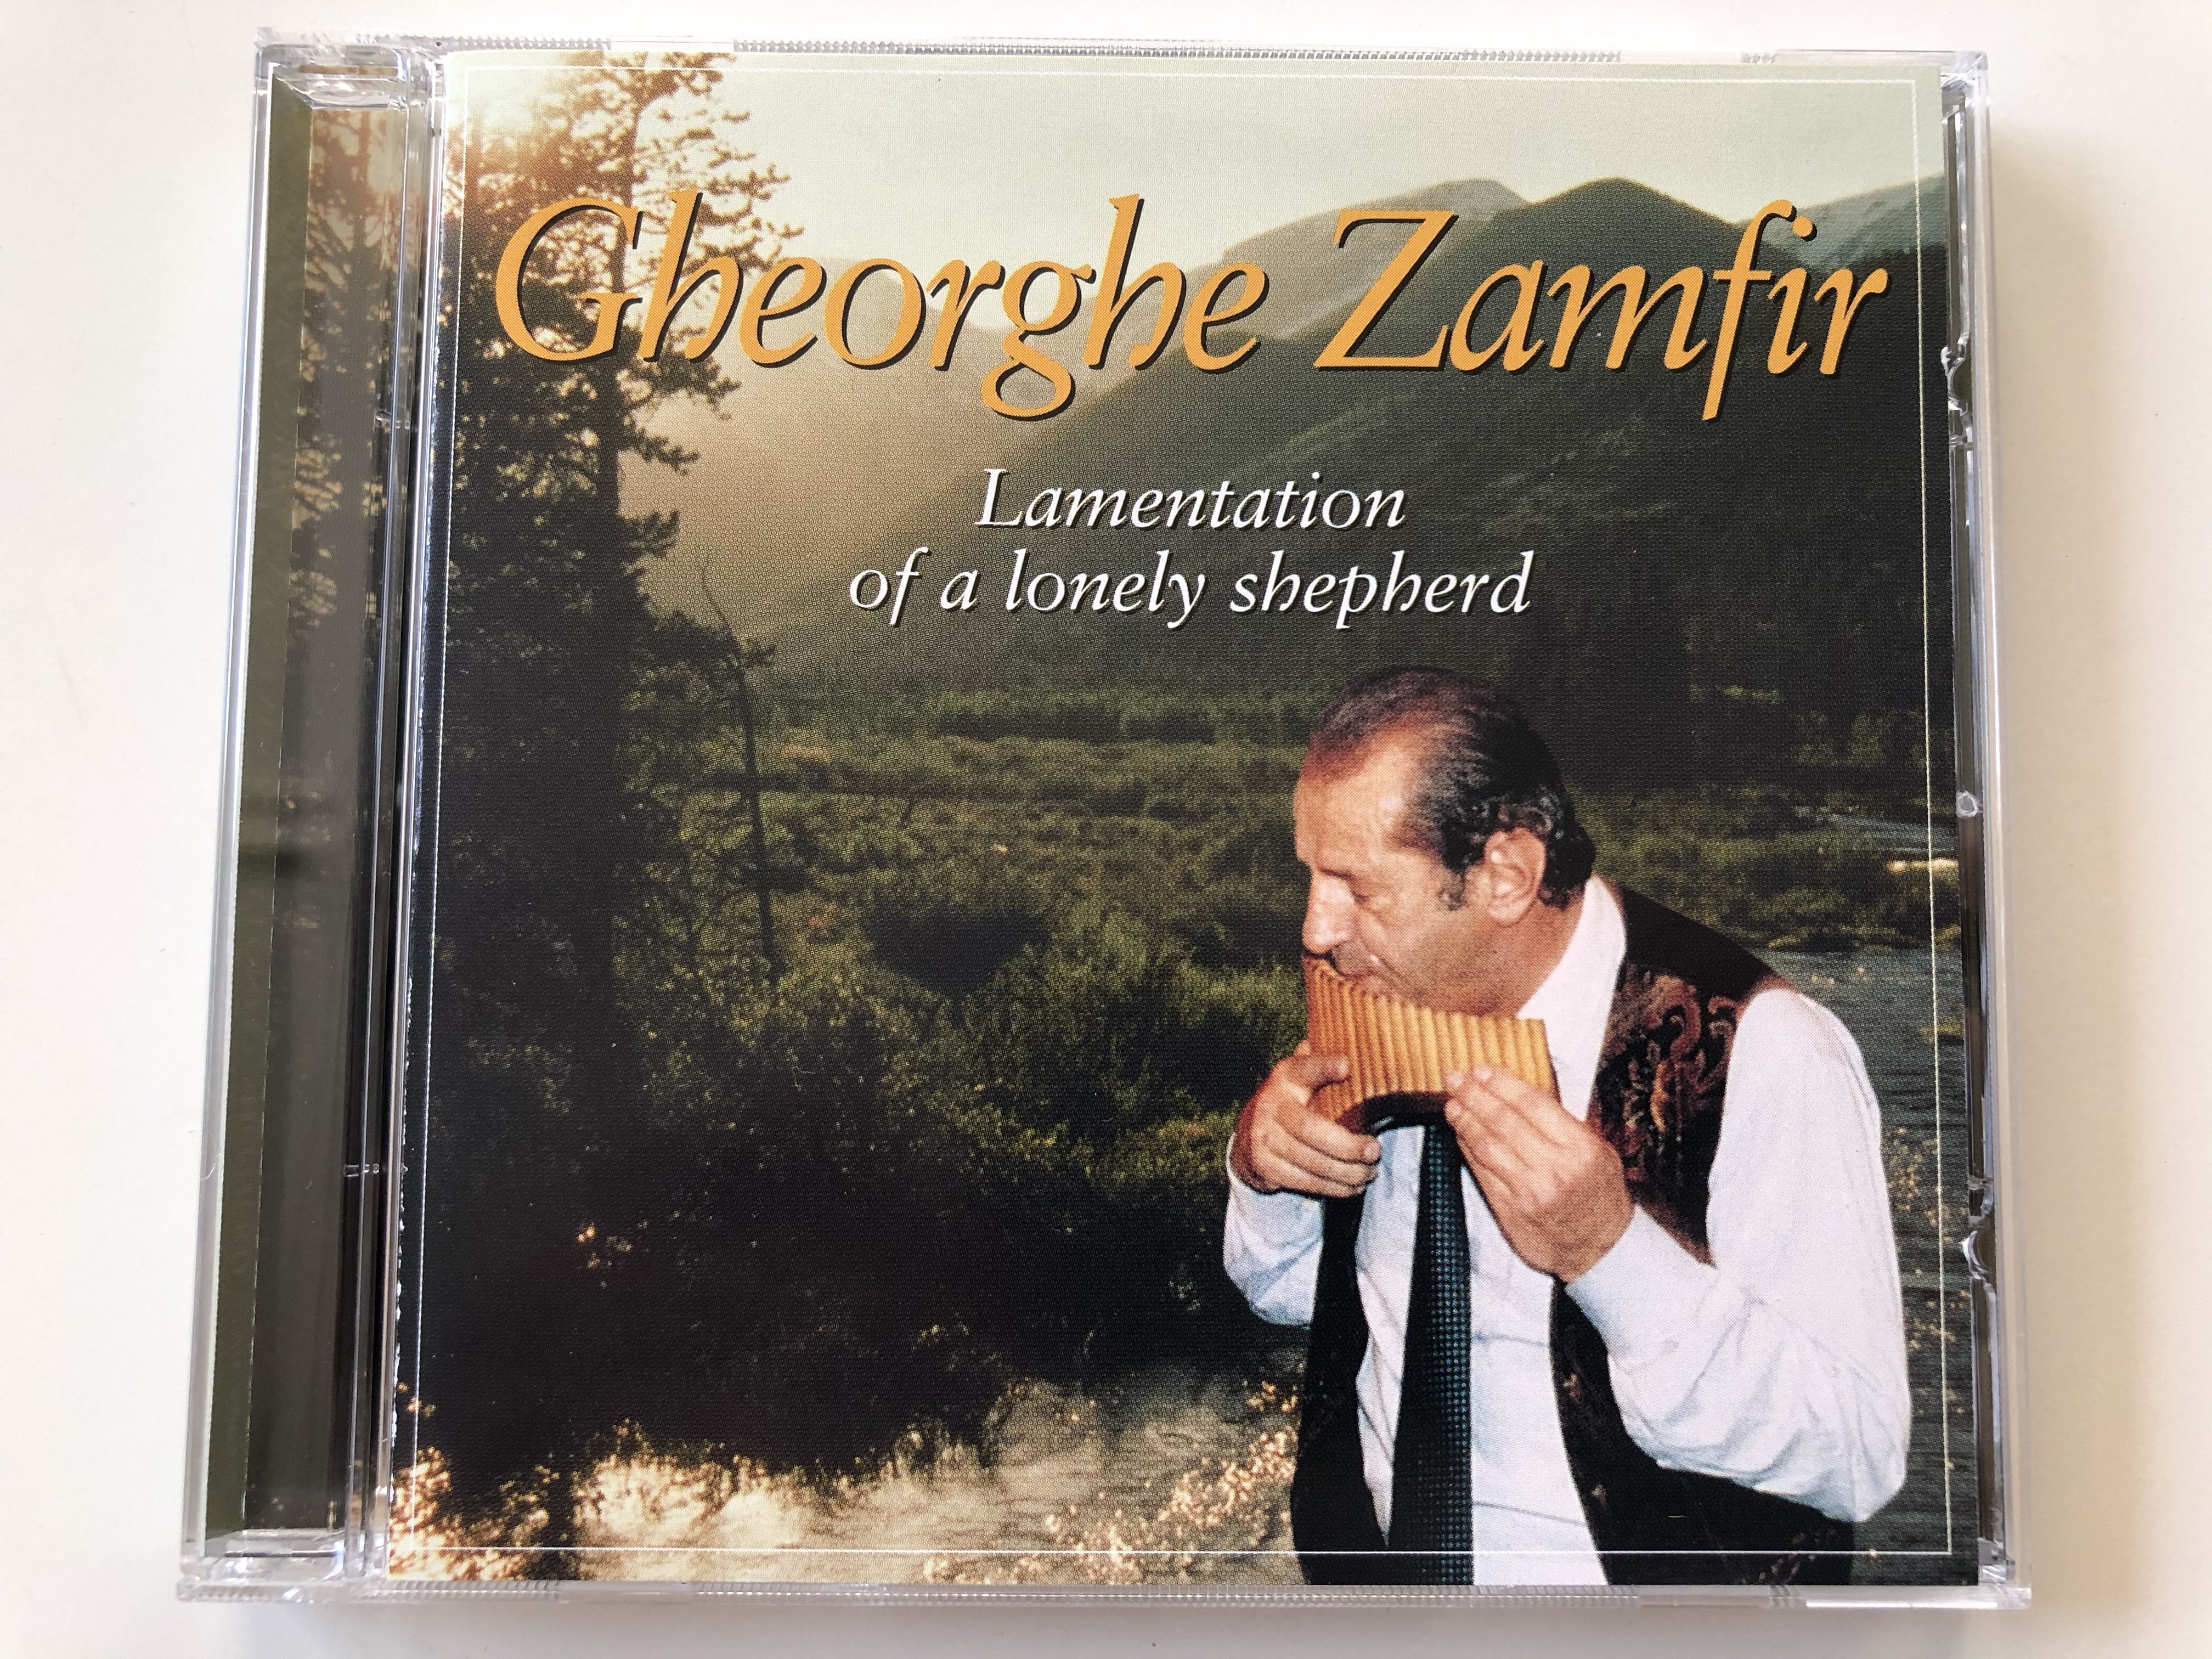 gheorghe-zamfir-lamentation-of-a-lonely-shepherd-digimode-emertainment-ltd.-audio-cd-vil-6003-2-1-.jpg